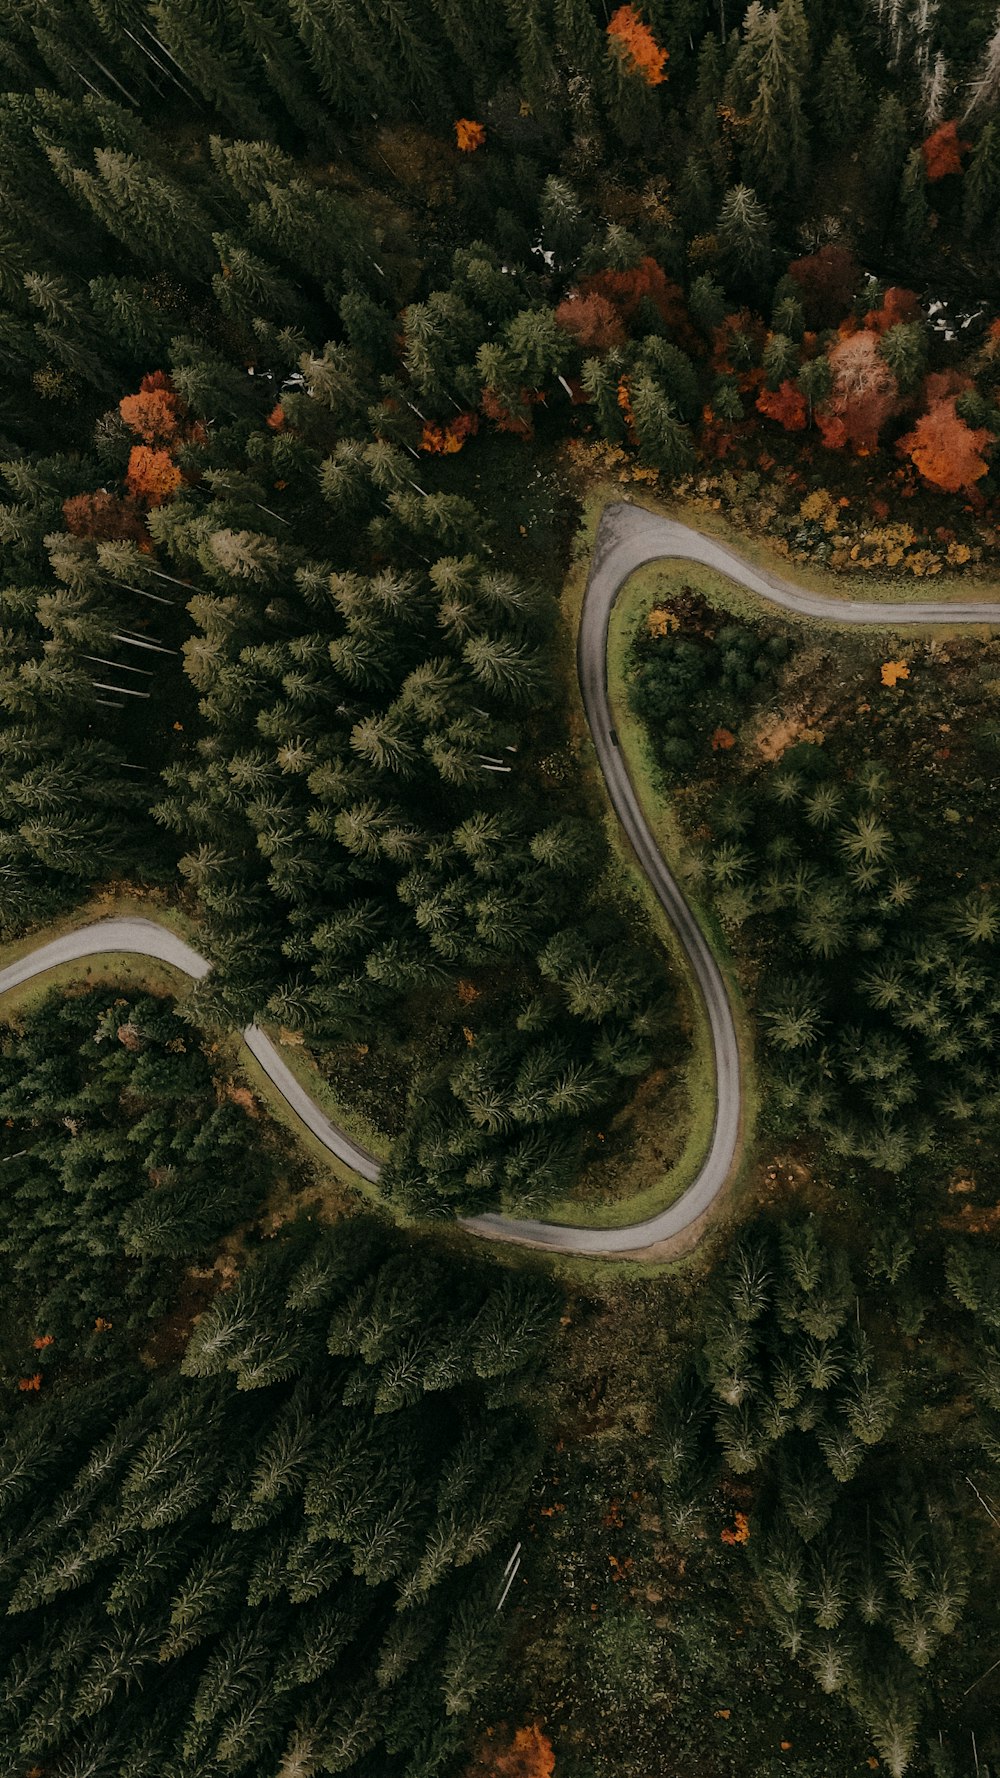 Vista aérea de árboles verdes